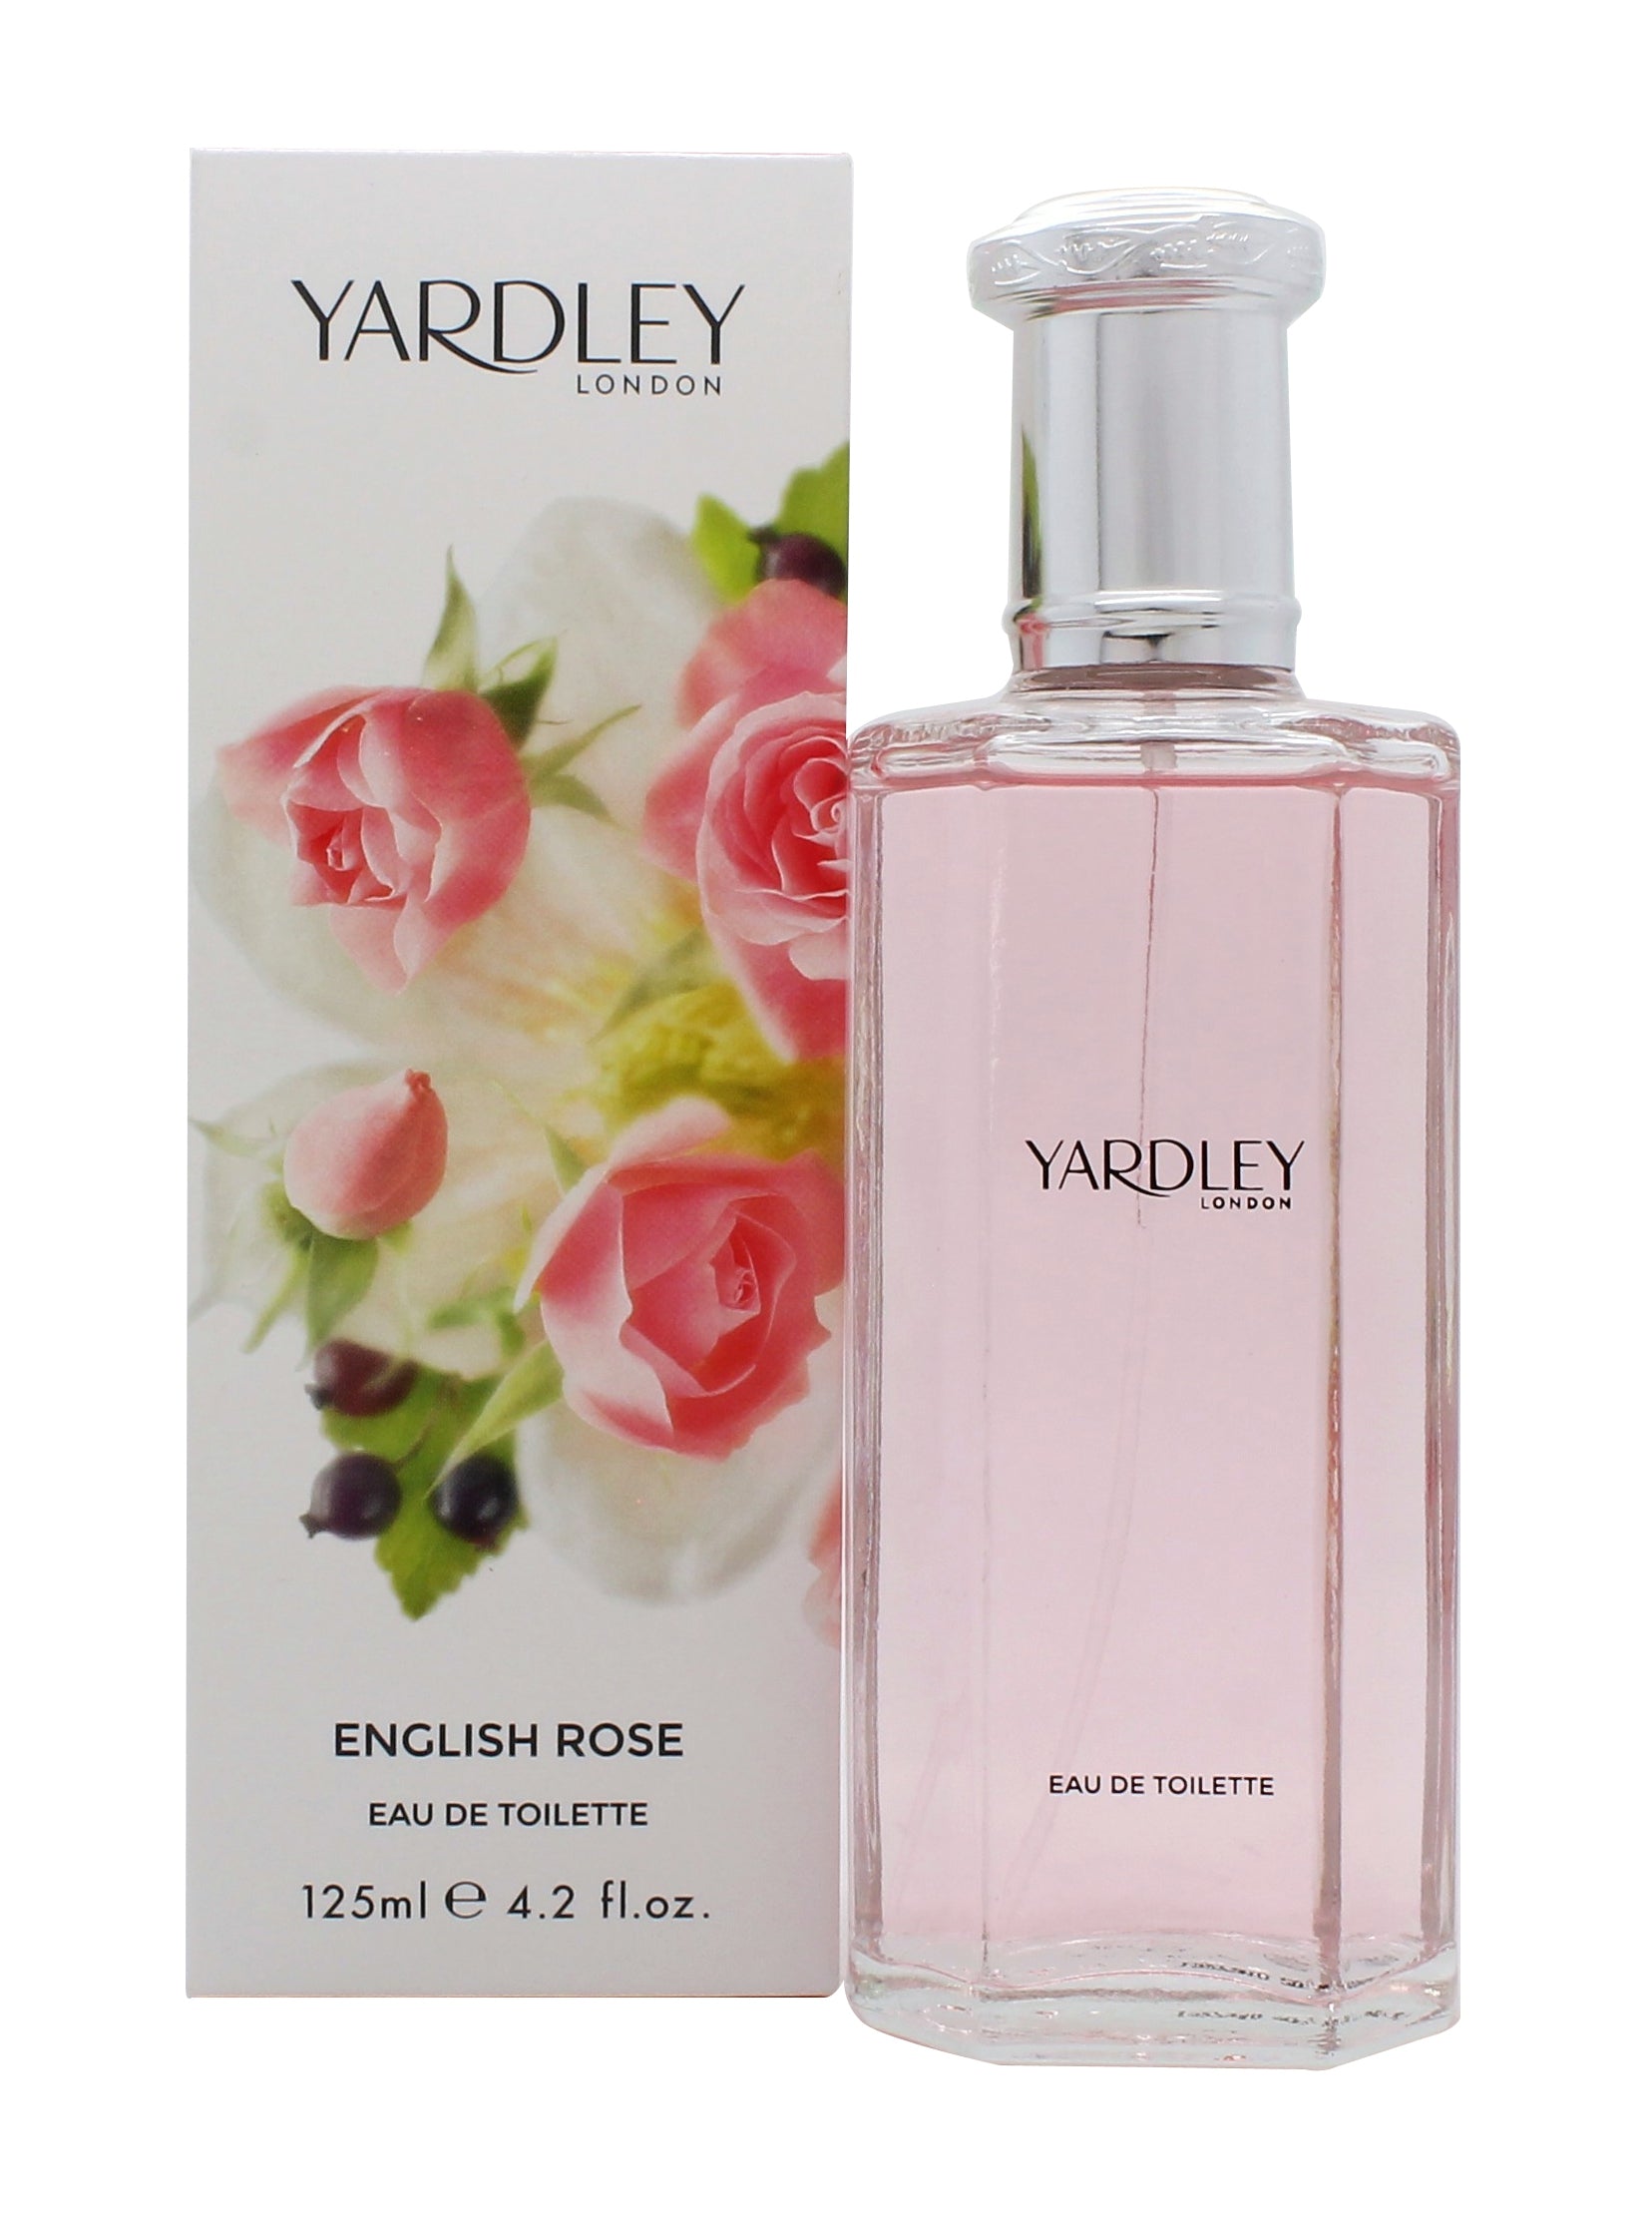 View Yardley English Rose Eau de Toilette 125ml Spray information